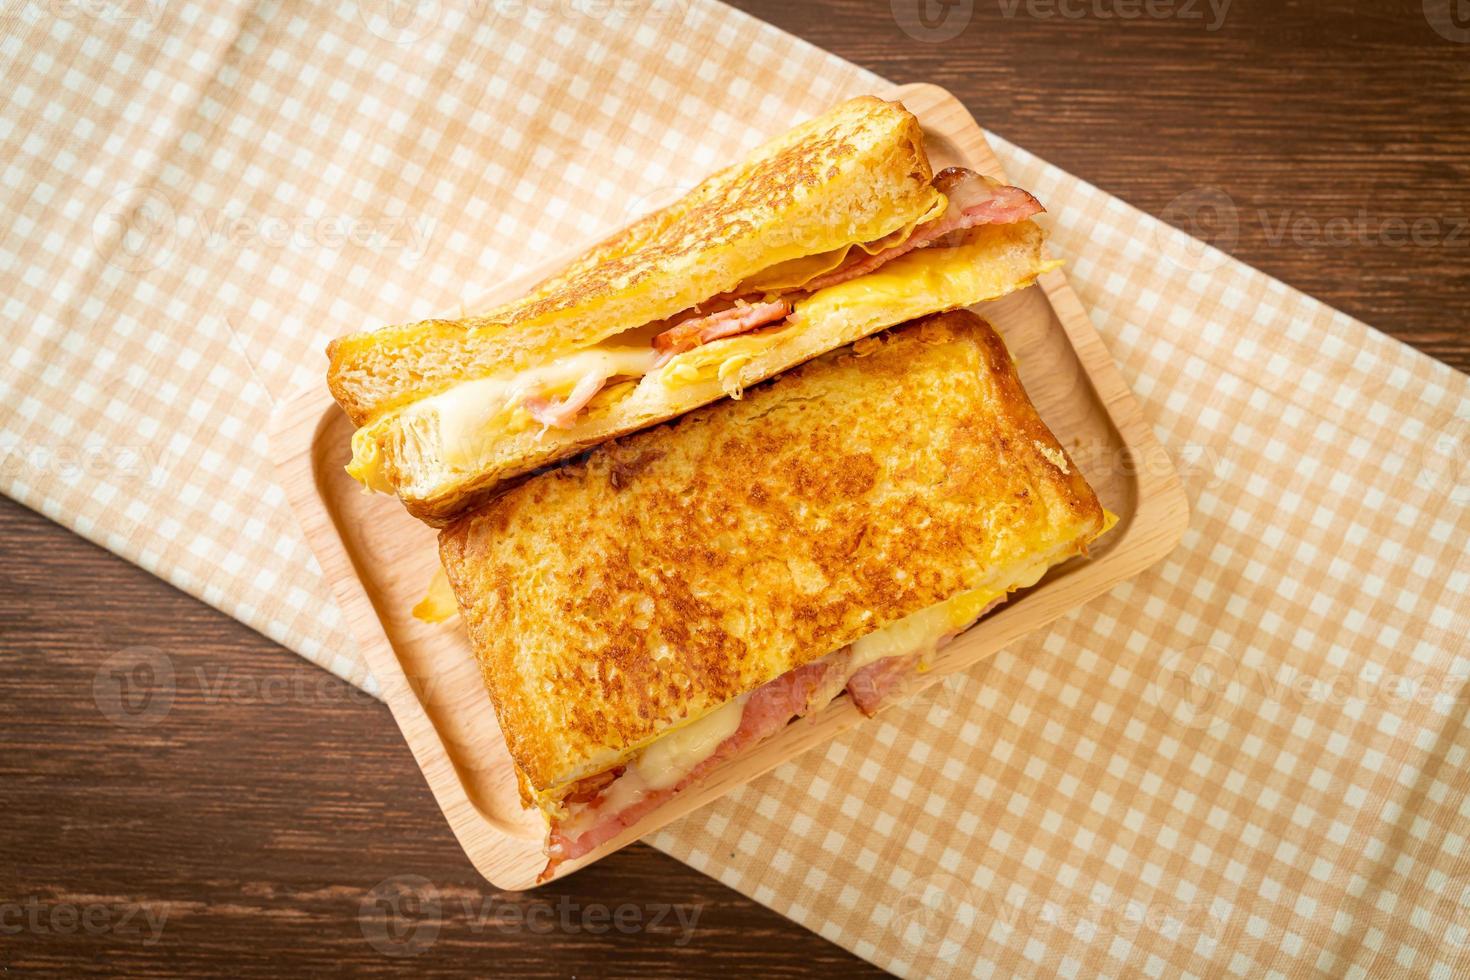 torrada francesa caseira com presunto, bacon e sanduíche de queijo com ovo foto